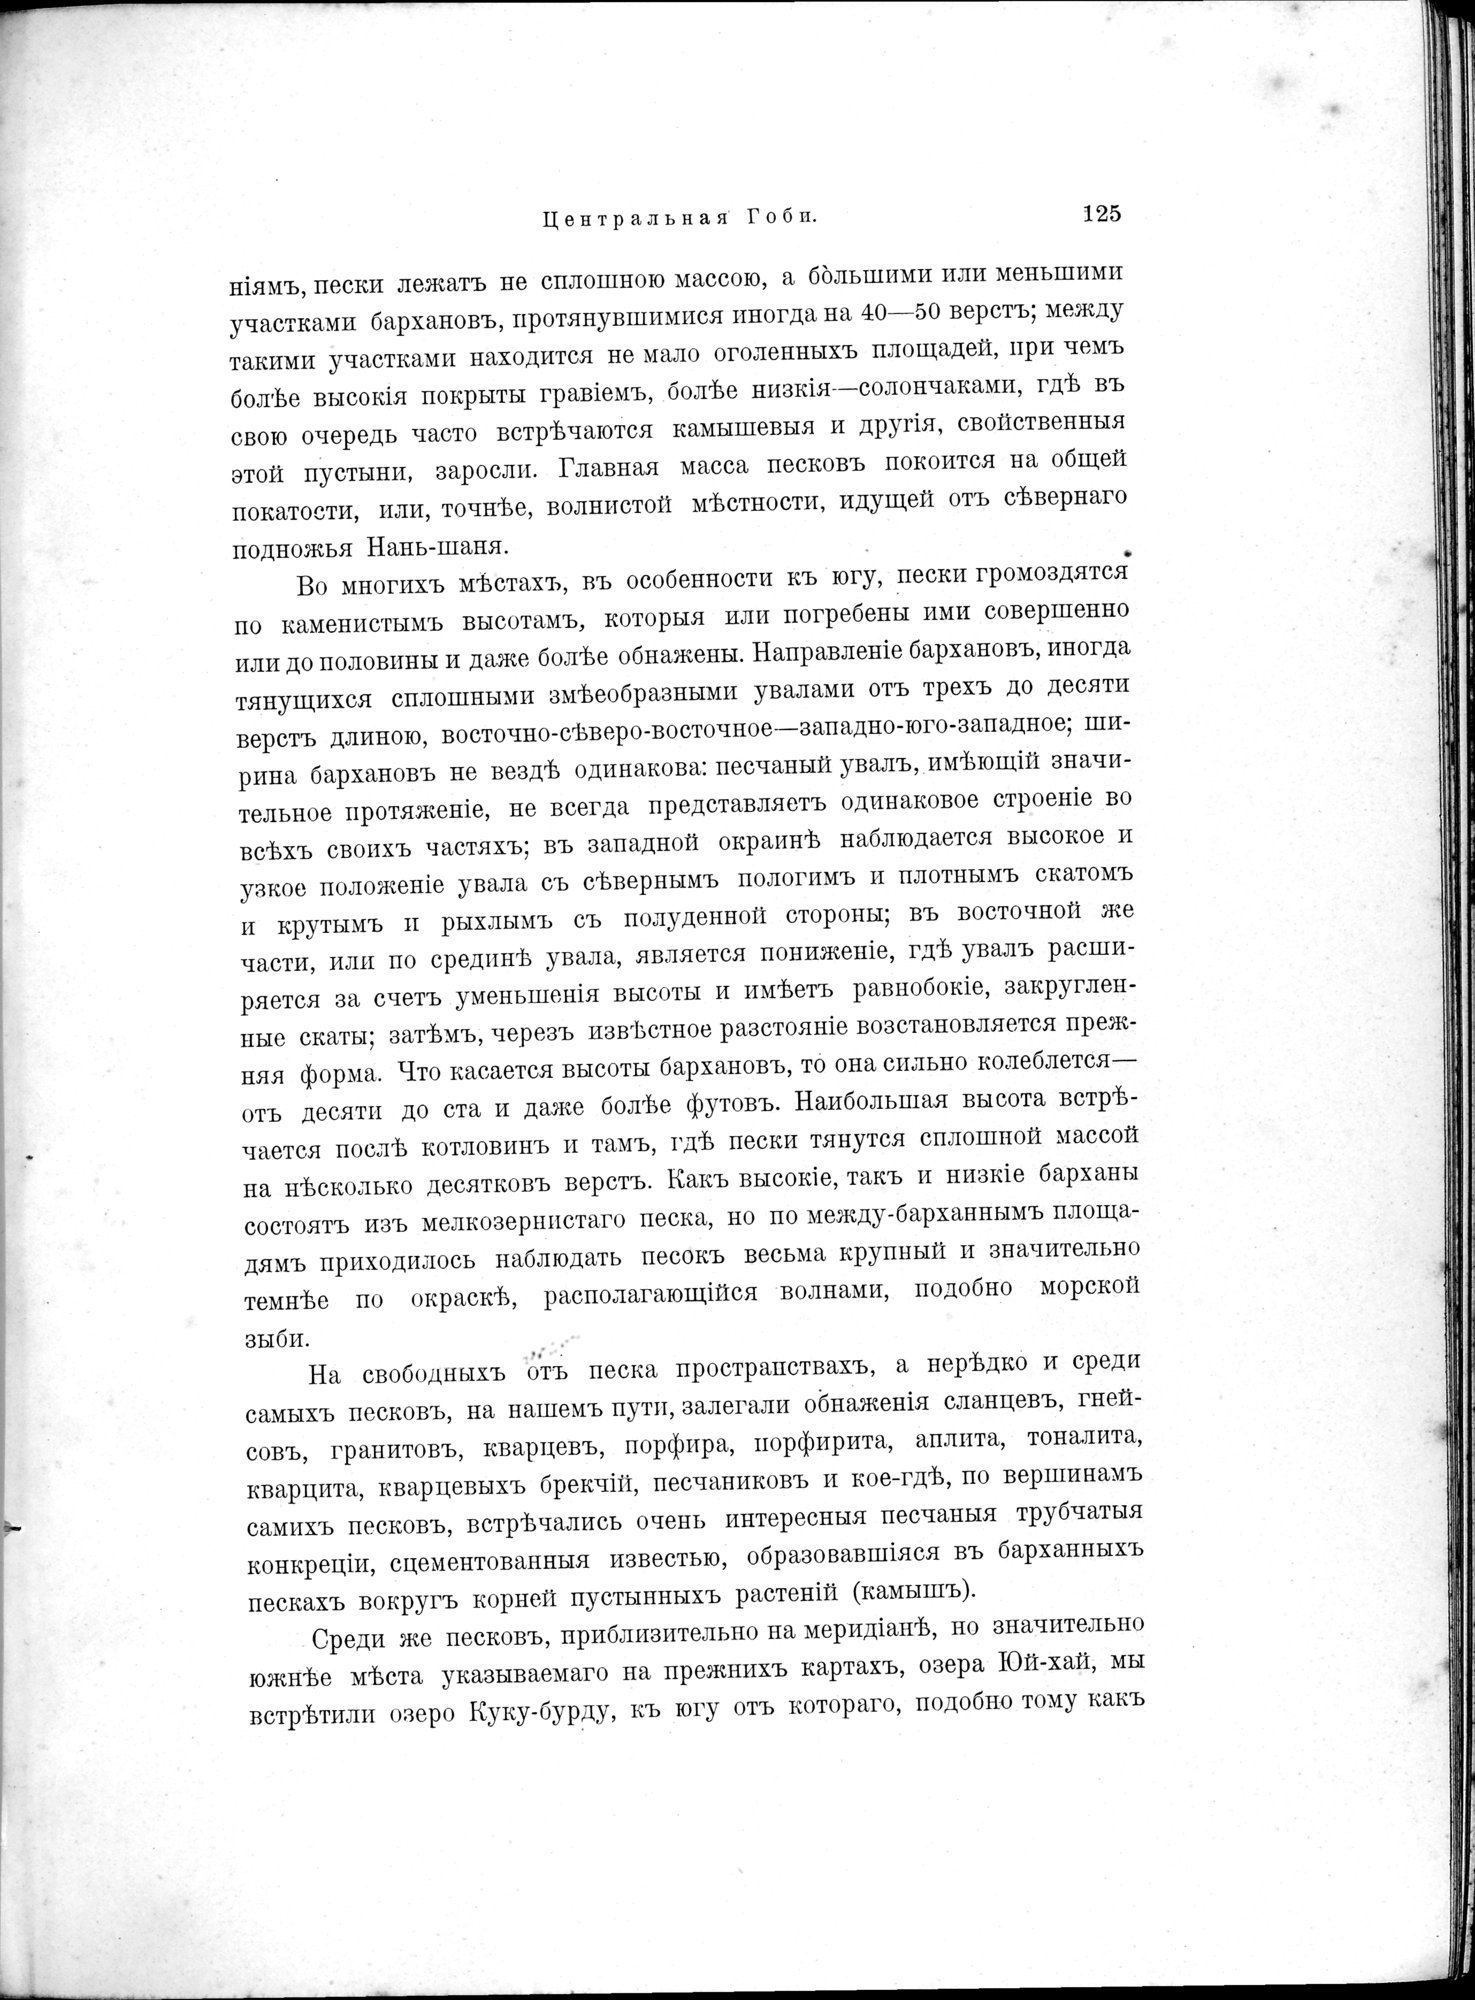 Mongoliia i Kam : vol.1 / Page 159 (Grayscale High Resolution Image)